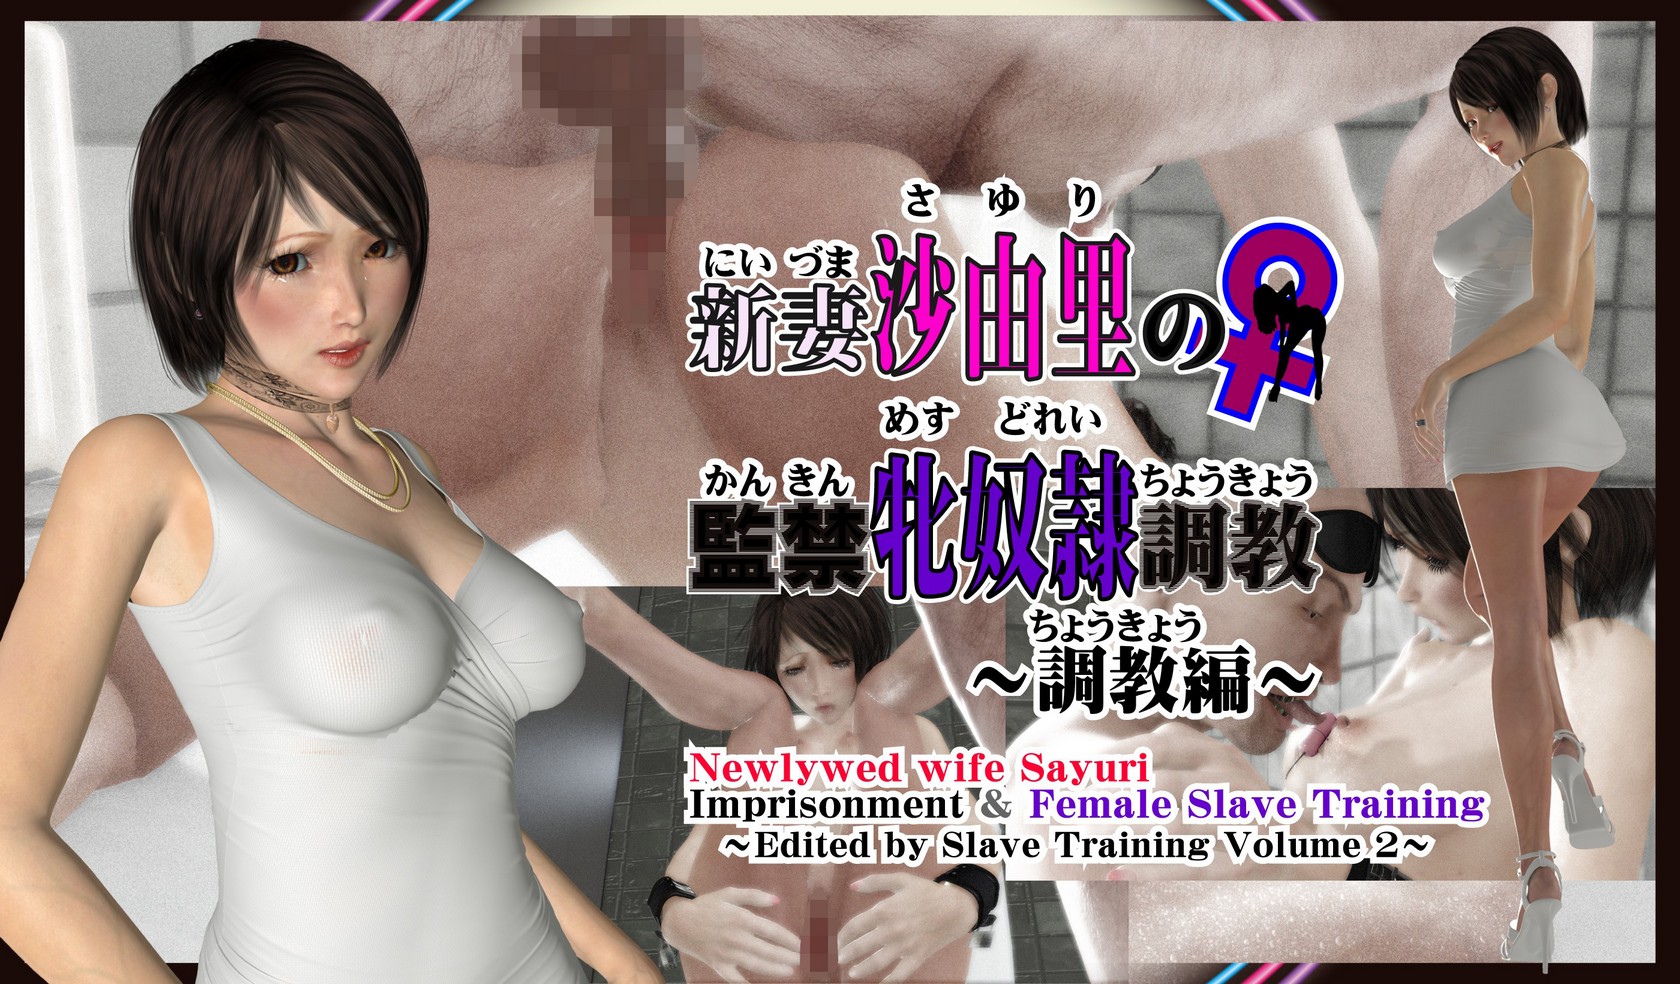 Amie Project Shinzuma Saoris confinement female slave training abduction version Japanese Hentai Comic